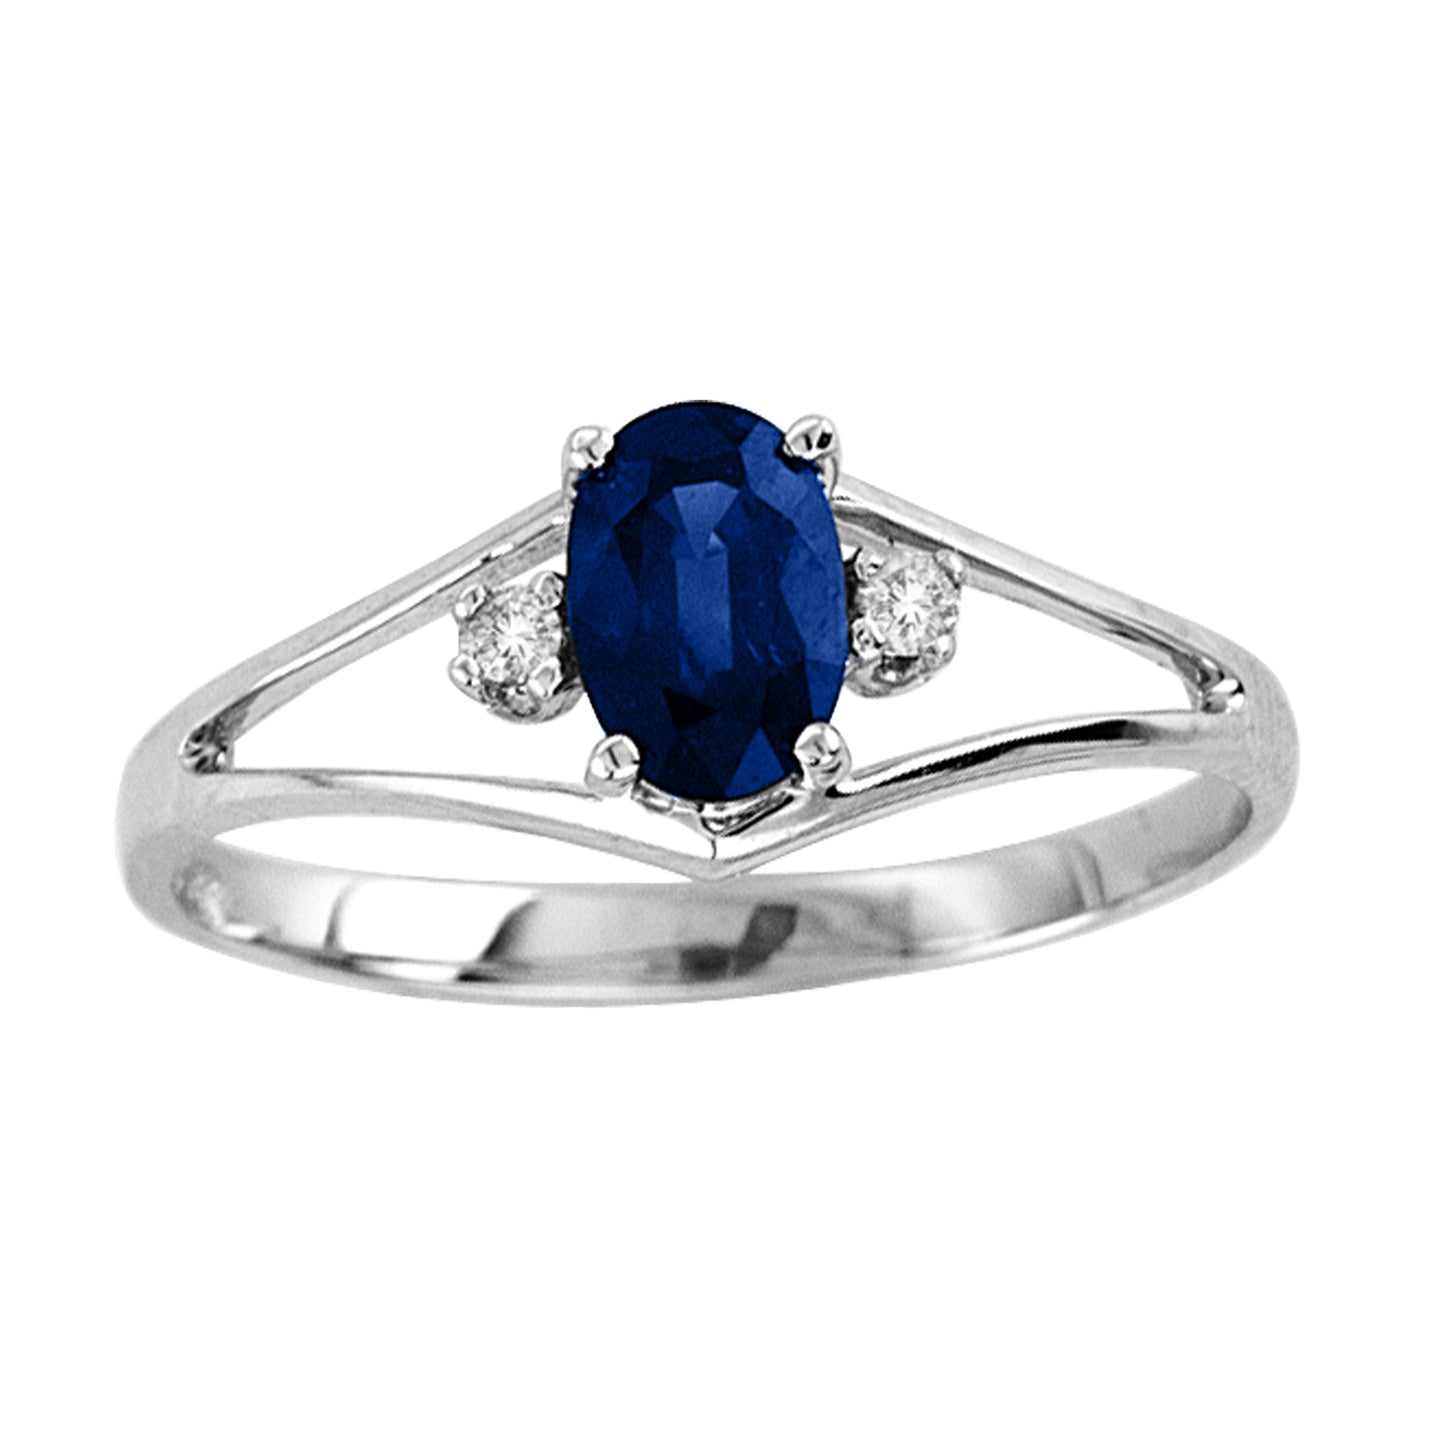 Blue Sapphire & Diamond Ring in 14k White Gold